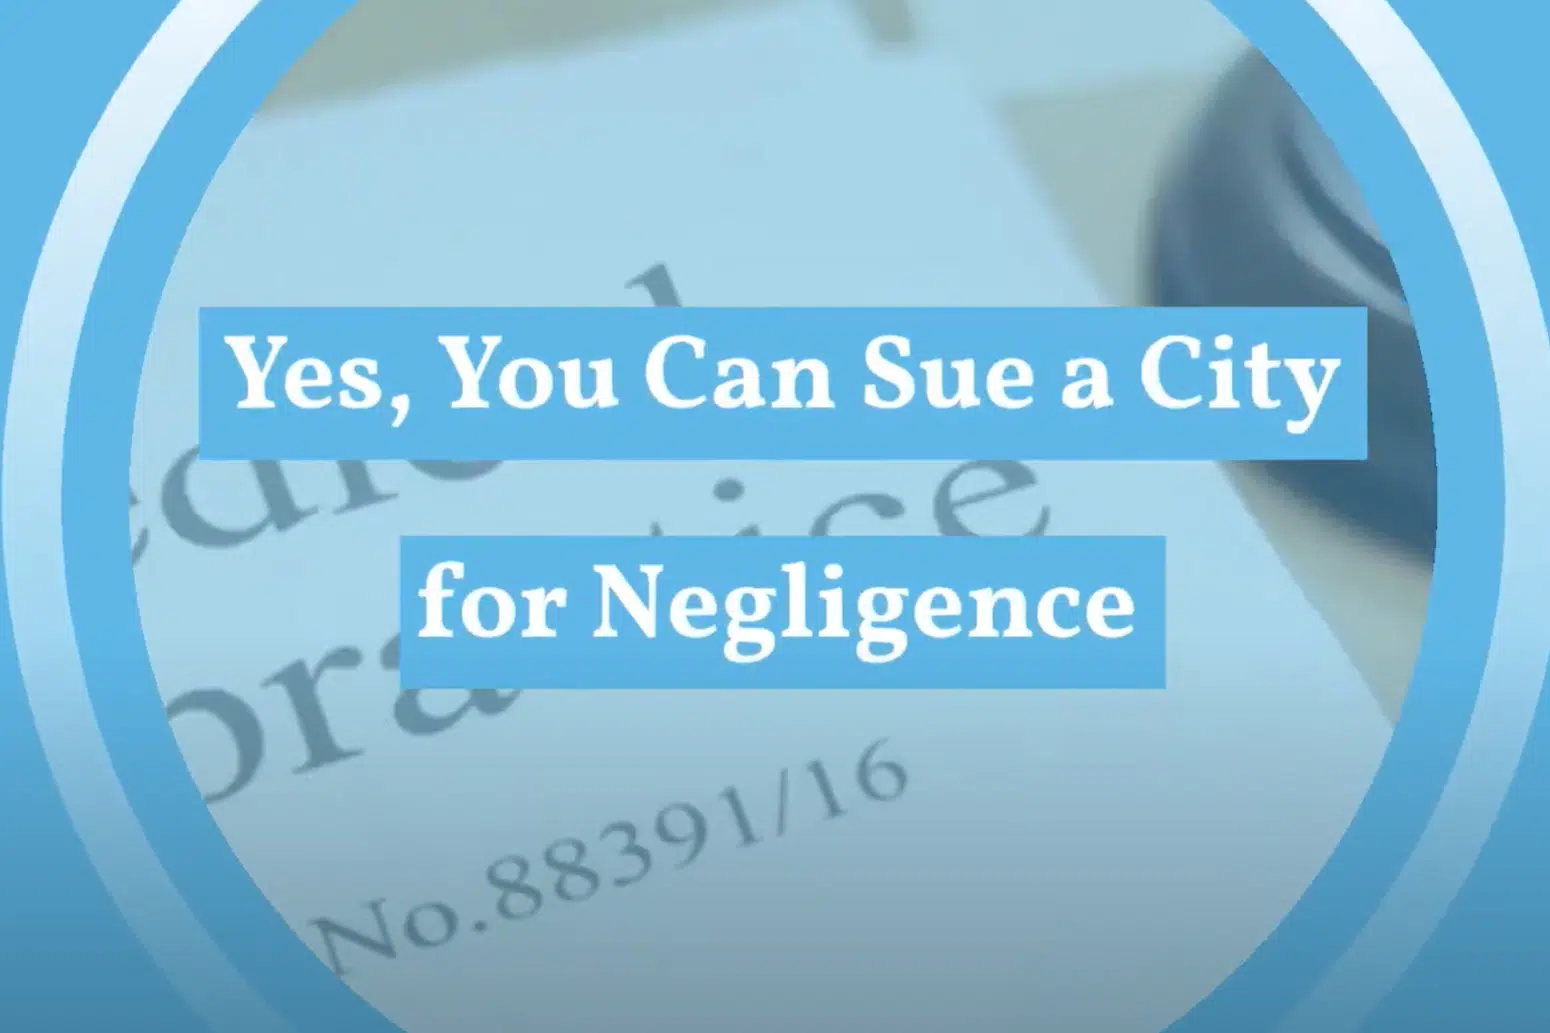 sue a city for negligence